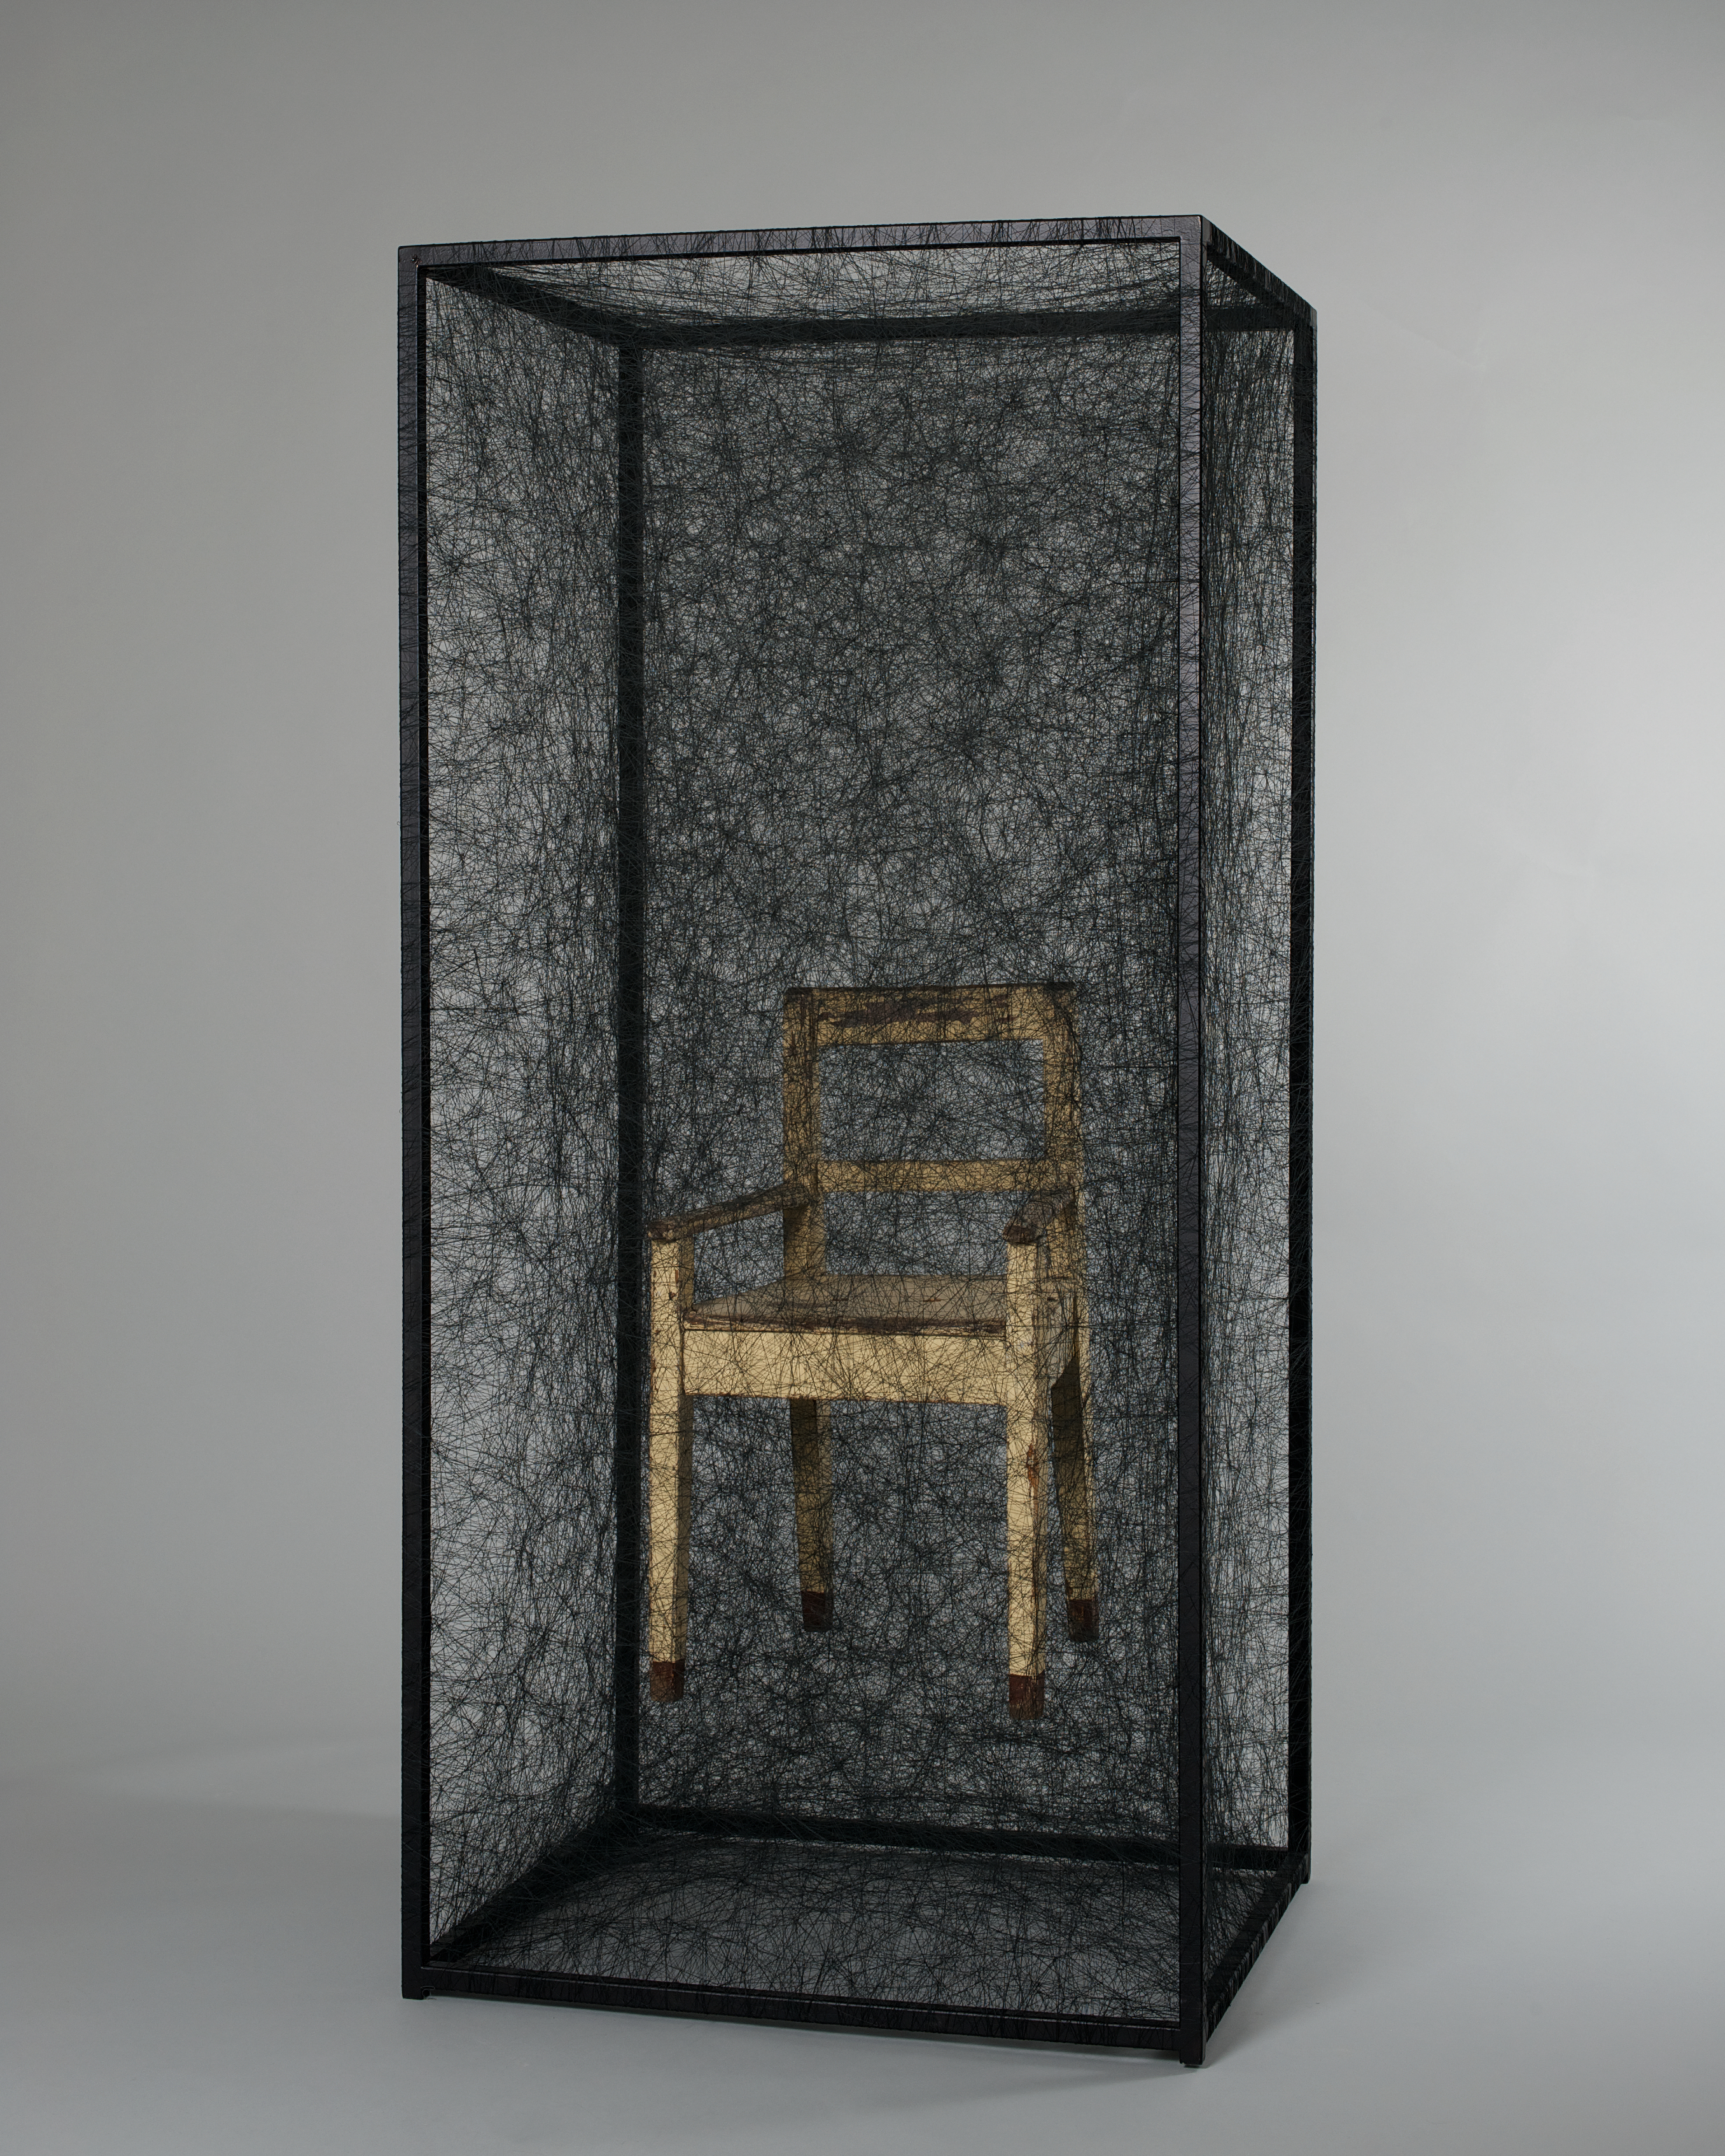 Chiharu Shiota, State of Being (Chair), 2012 / Kendi Gölgesinde